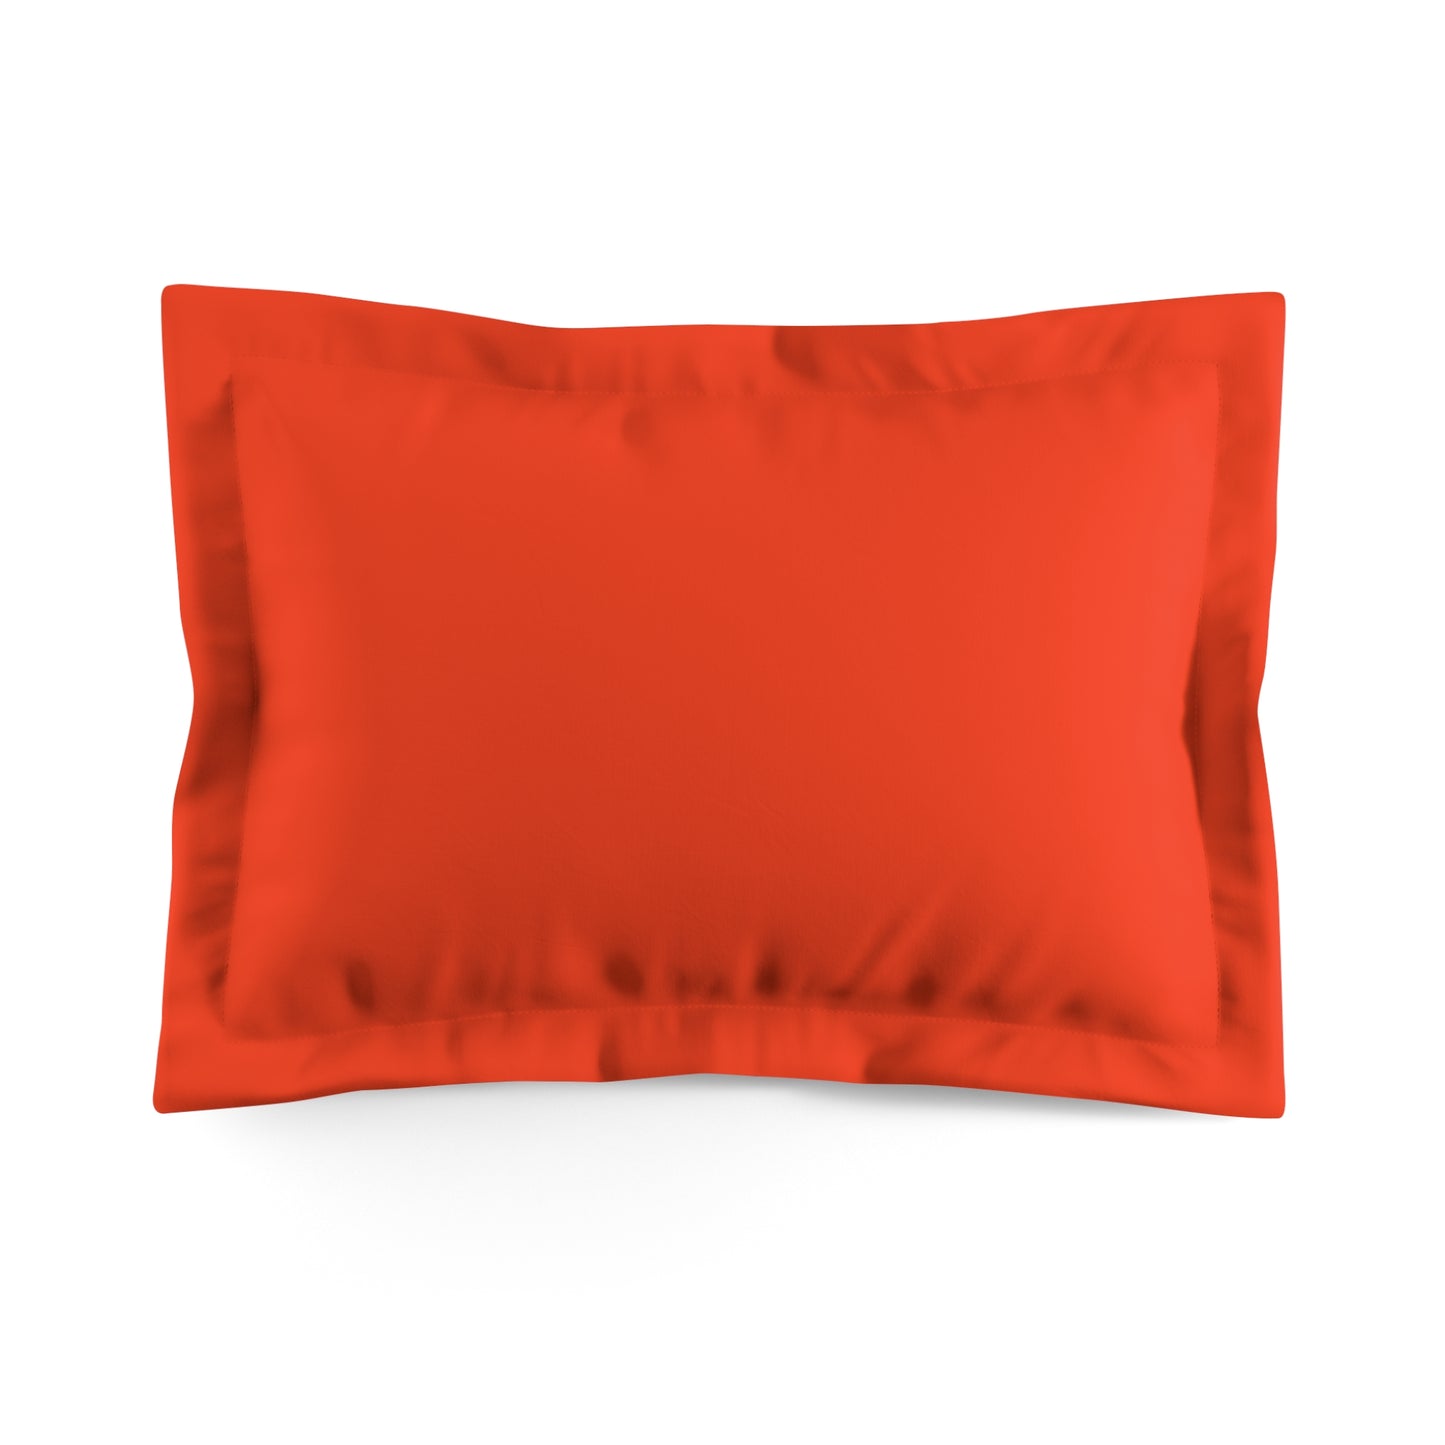 Soft and Cozy Microfiber Pillow Sham - Create Your Dream Bedroom - Expressive DeZien 